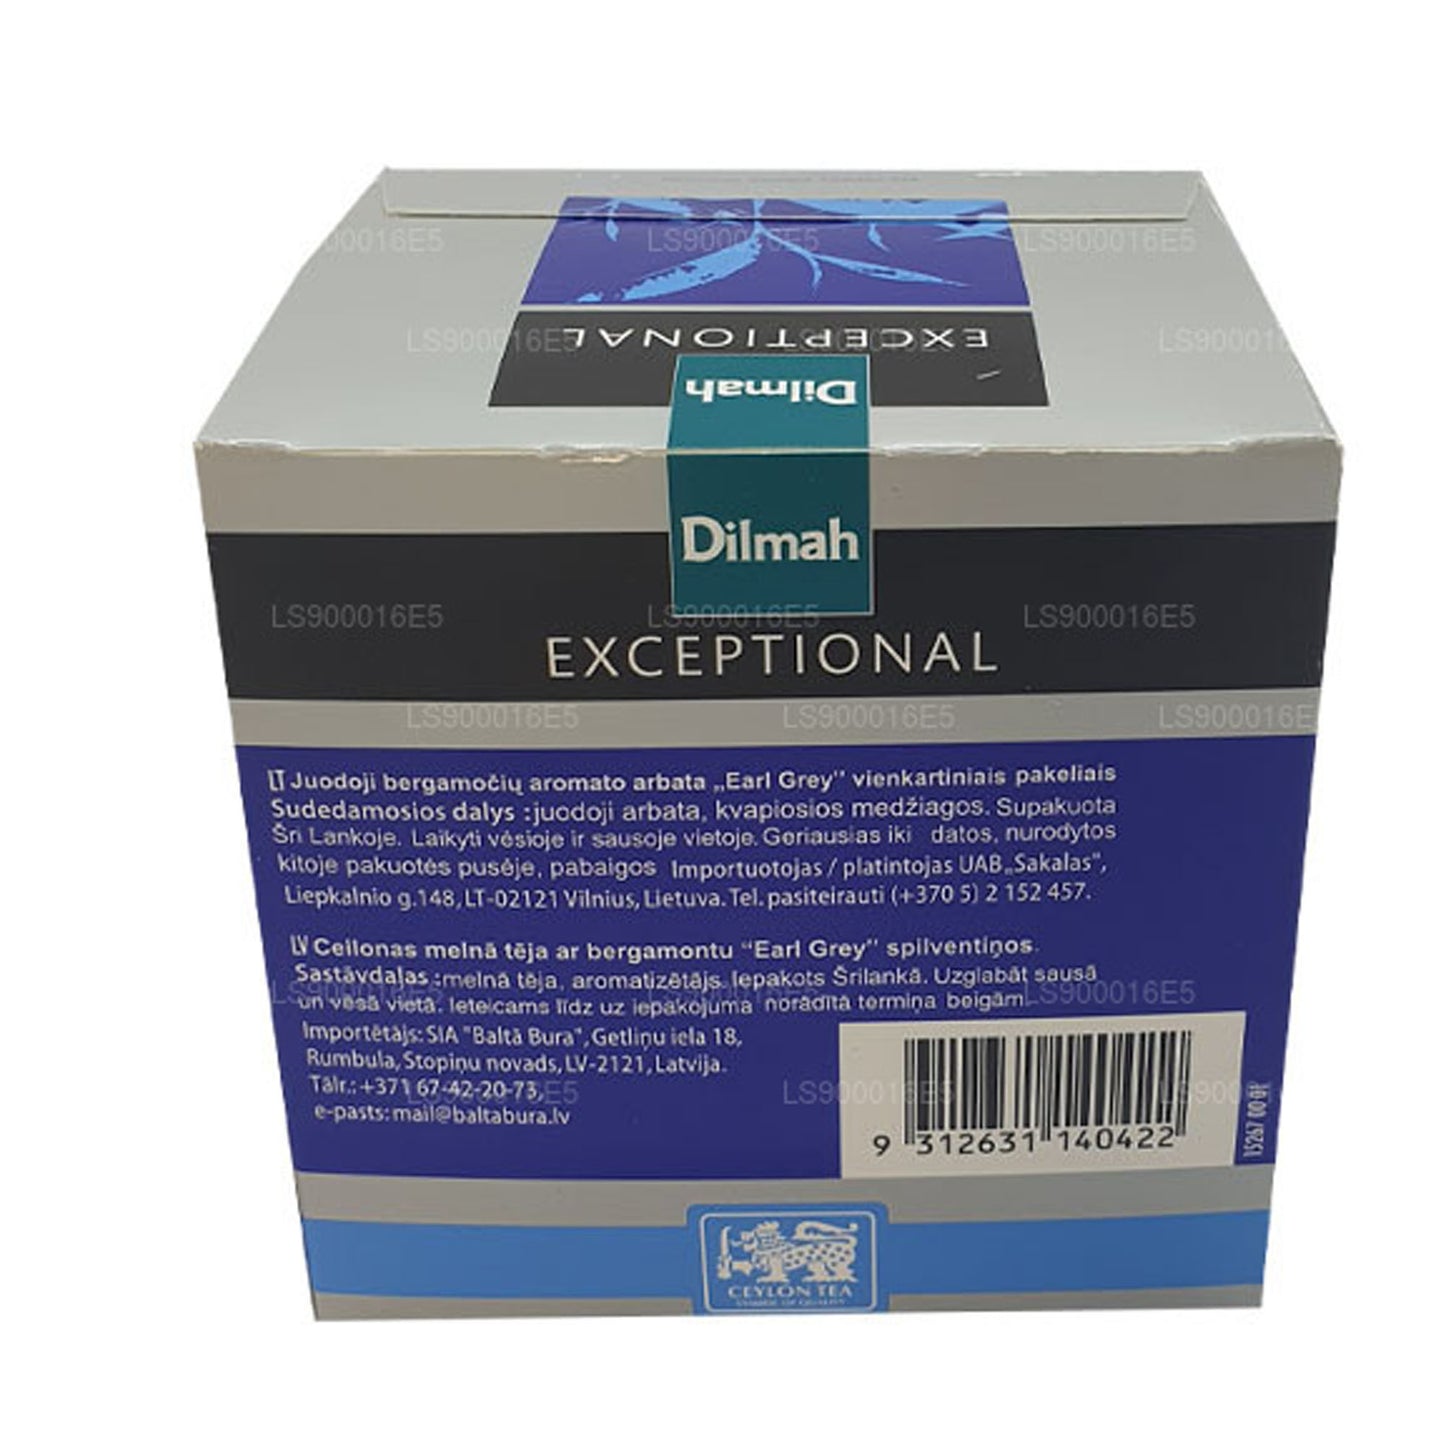 Dilmah Exceptional Elegant Earl Grey Prawdziwa herbata liściasta (40g) 20 torebek